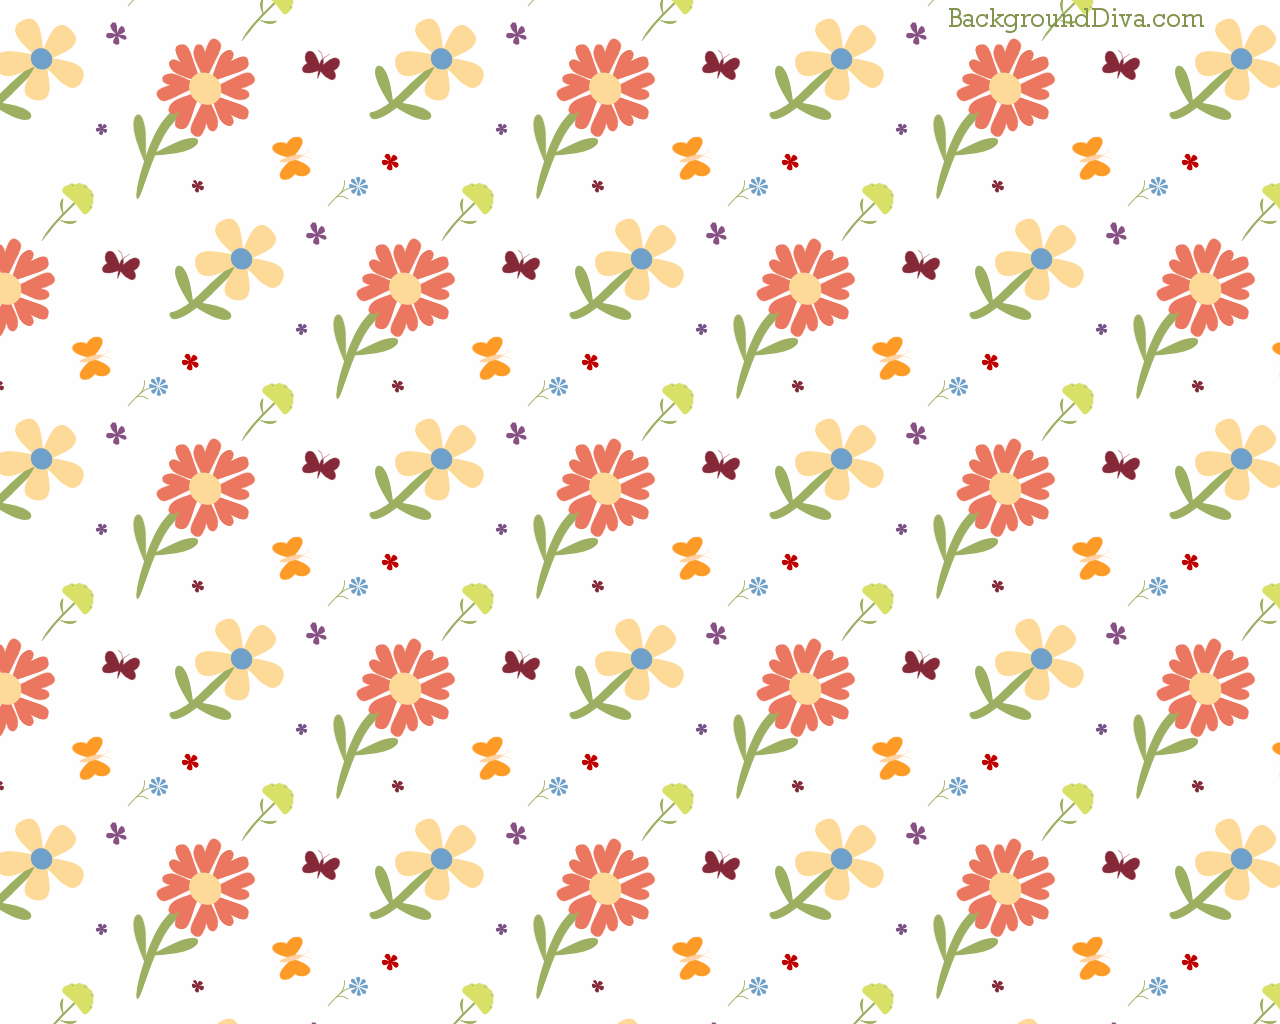 Tumblr Wallpaper Cute Pattern HD Wallpapers on picsfaircom